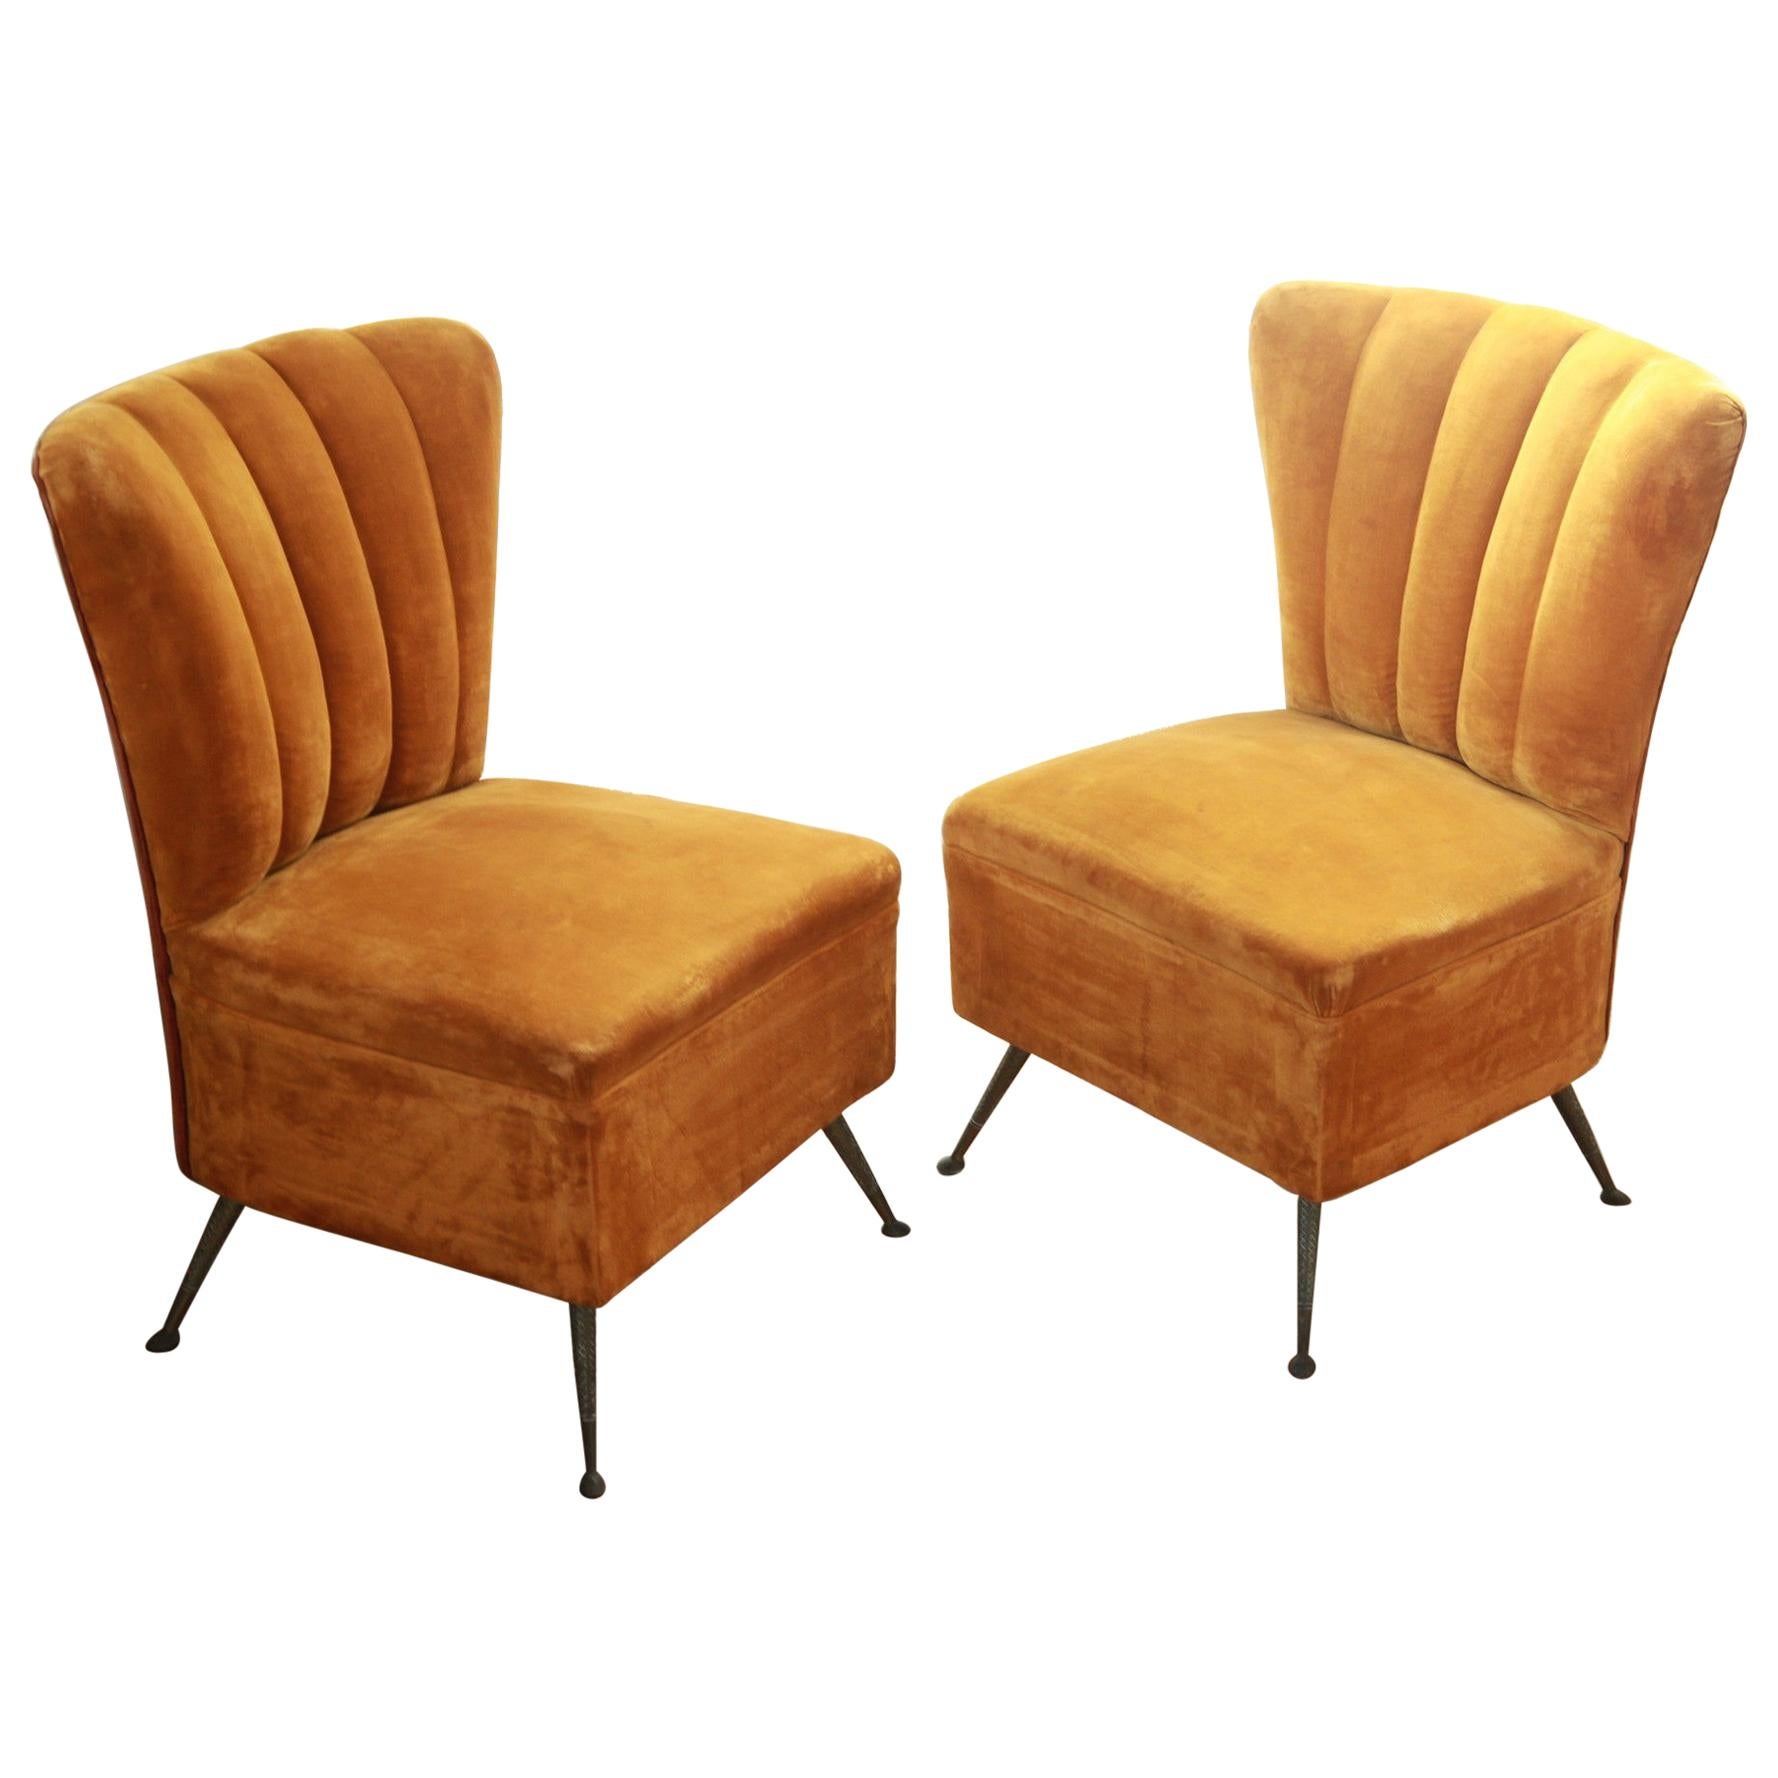 Pair of Small Scallop Chairs, Brass Cast Feet Original Velvet, Casa E Giardino